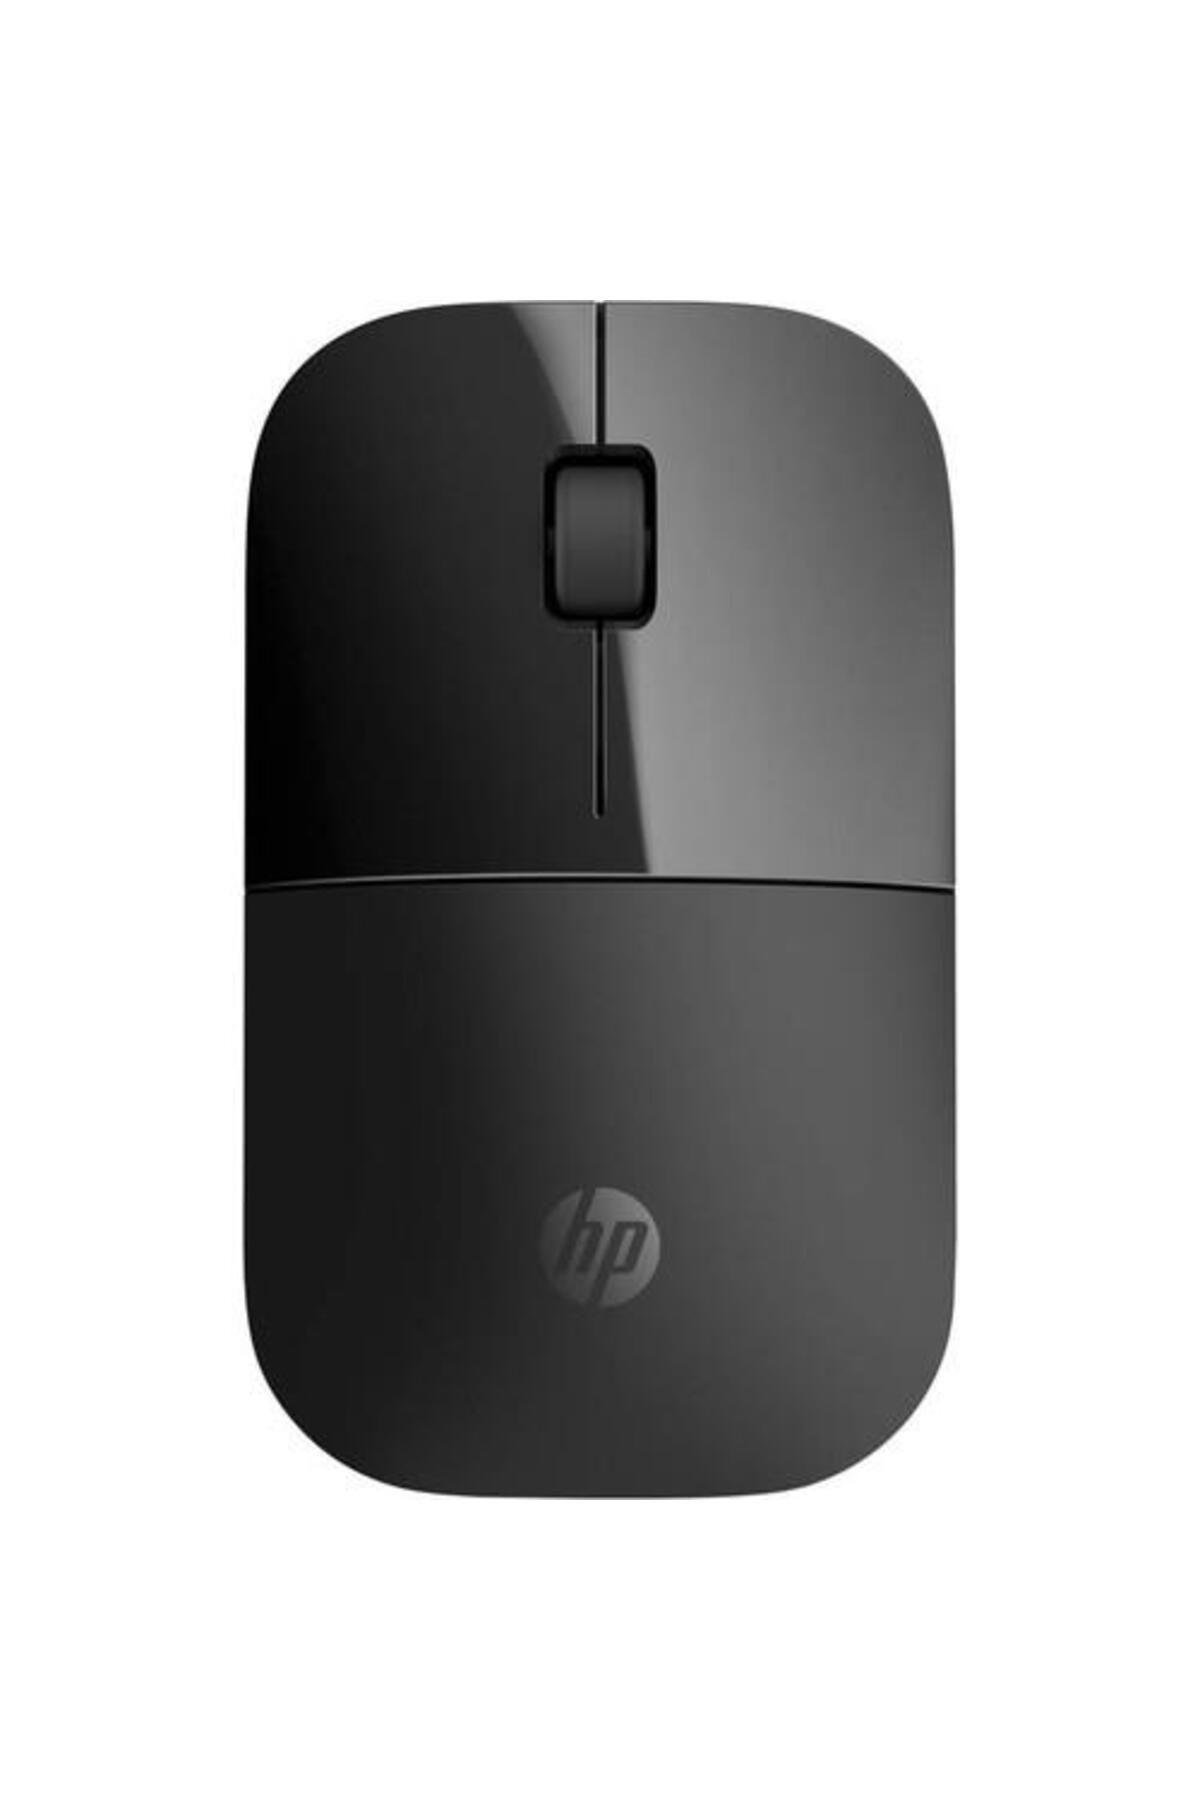 HP Z3700 Dual Kablosuz Bluetooh Mouse Siyah 758a8aa